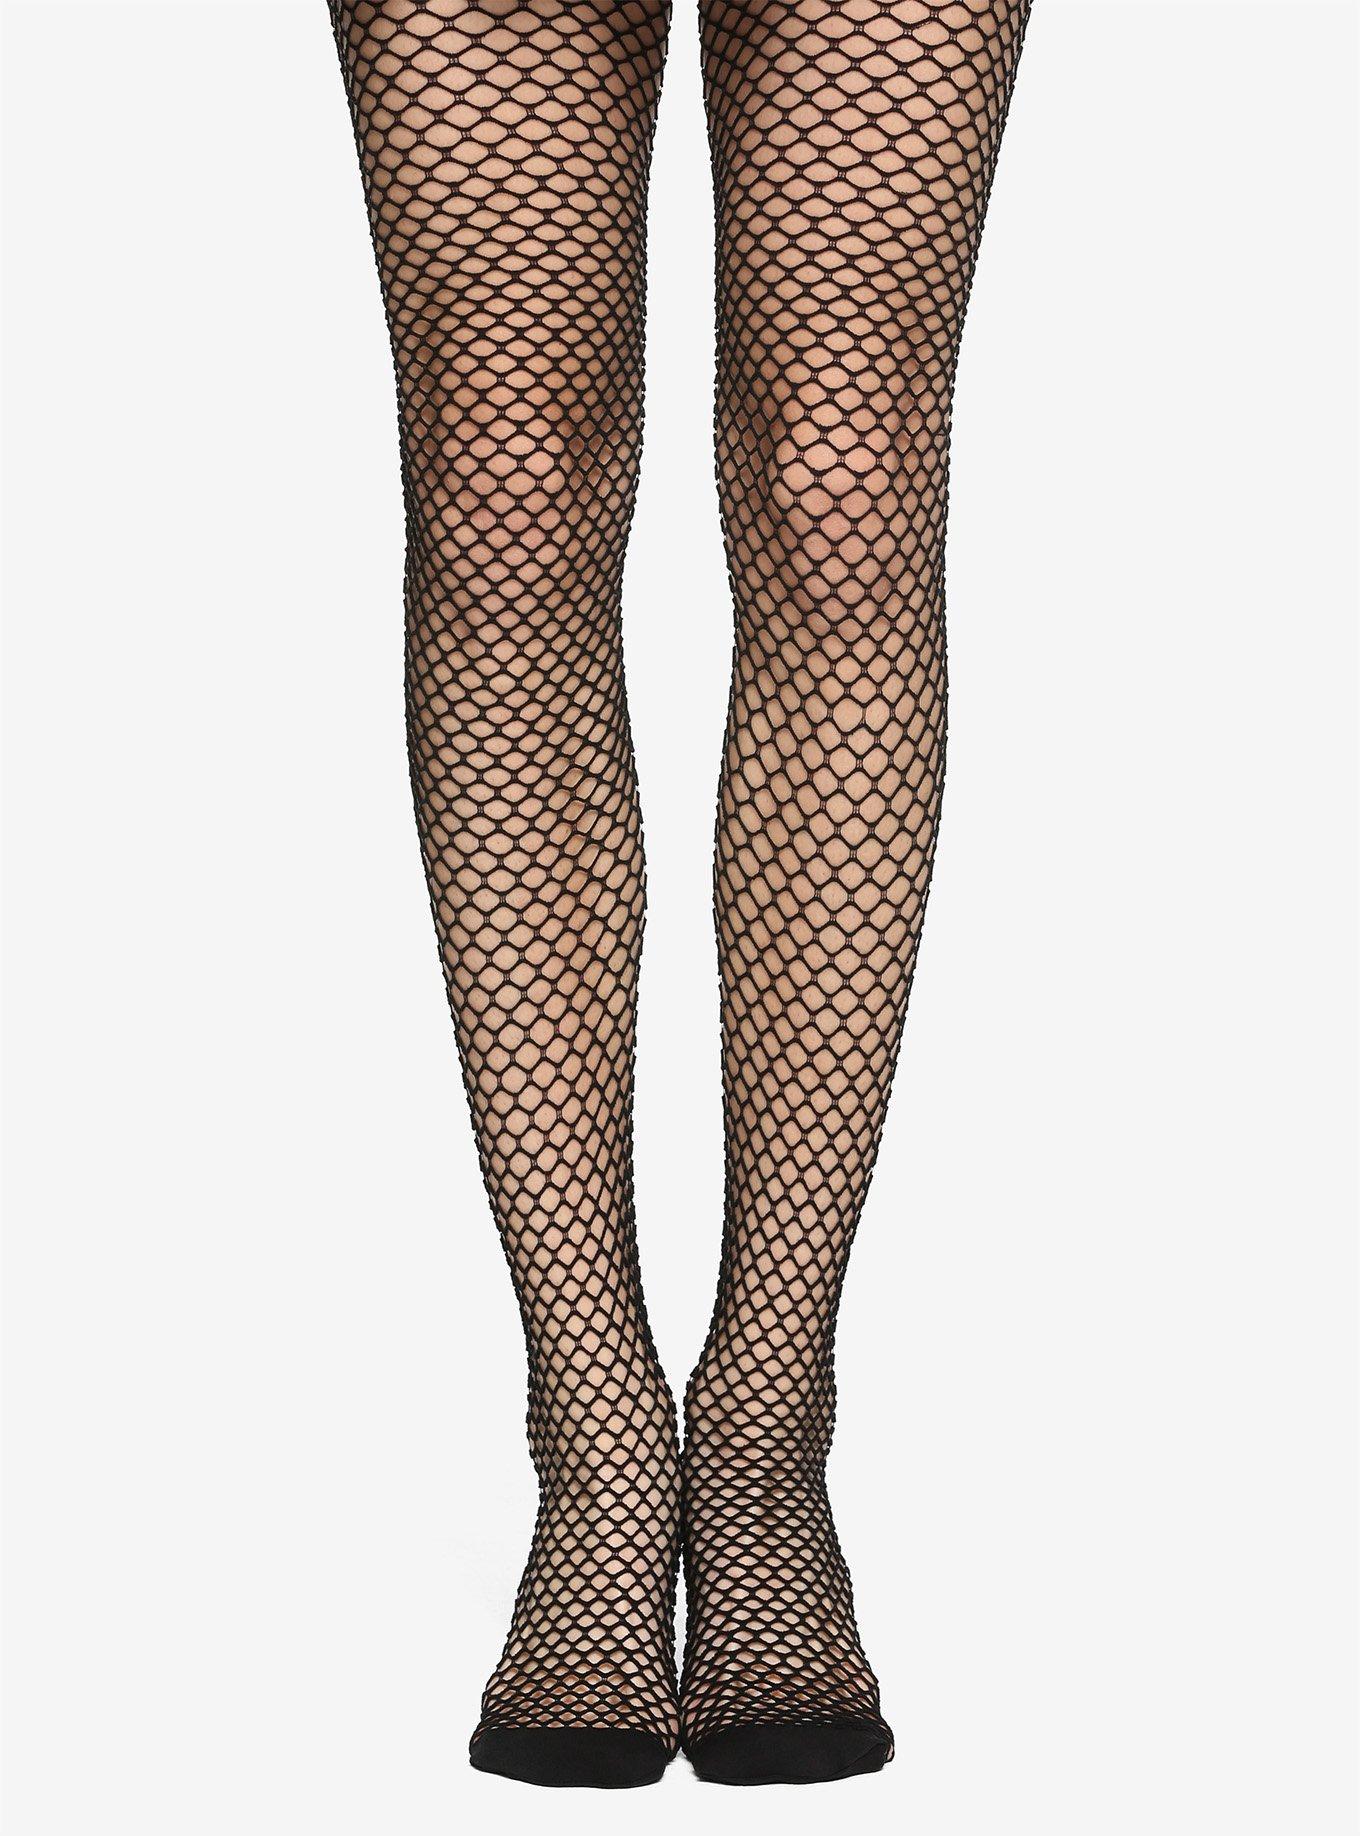 Mid-Thigh Length Fishnet Stockings